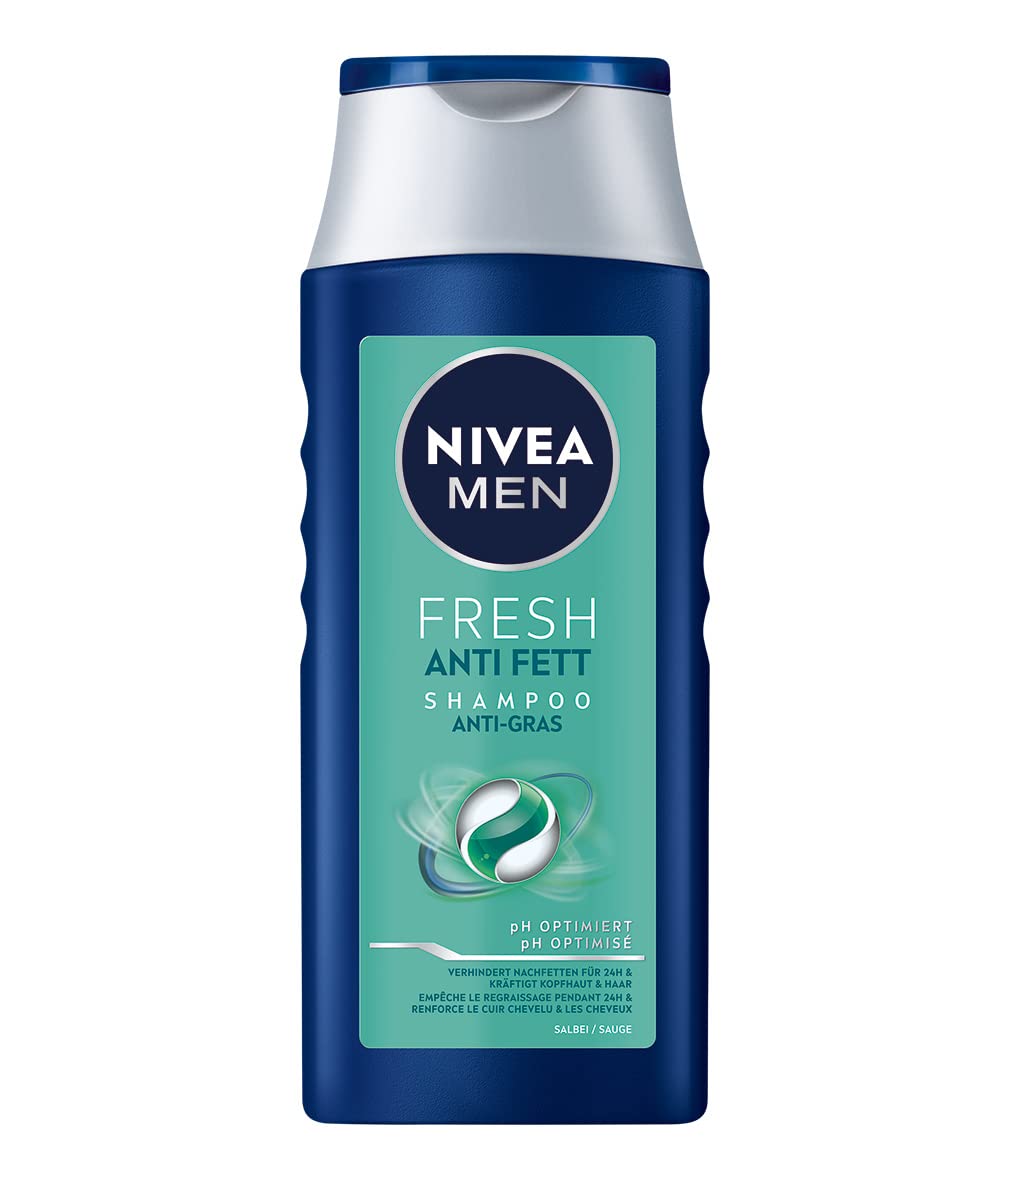 Nivea Men Fresh Shampoo Anti-Fett, 250 ml